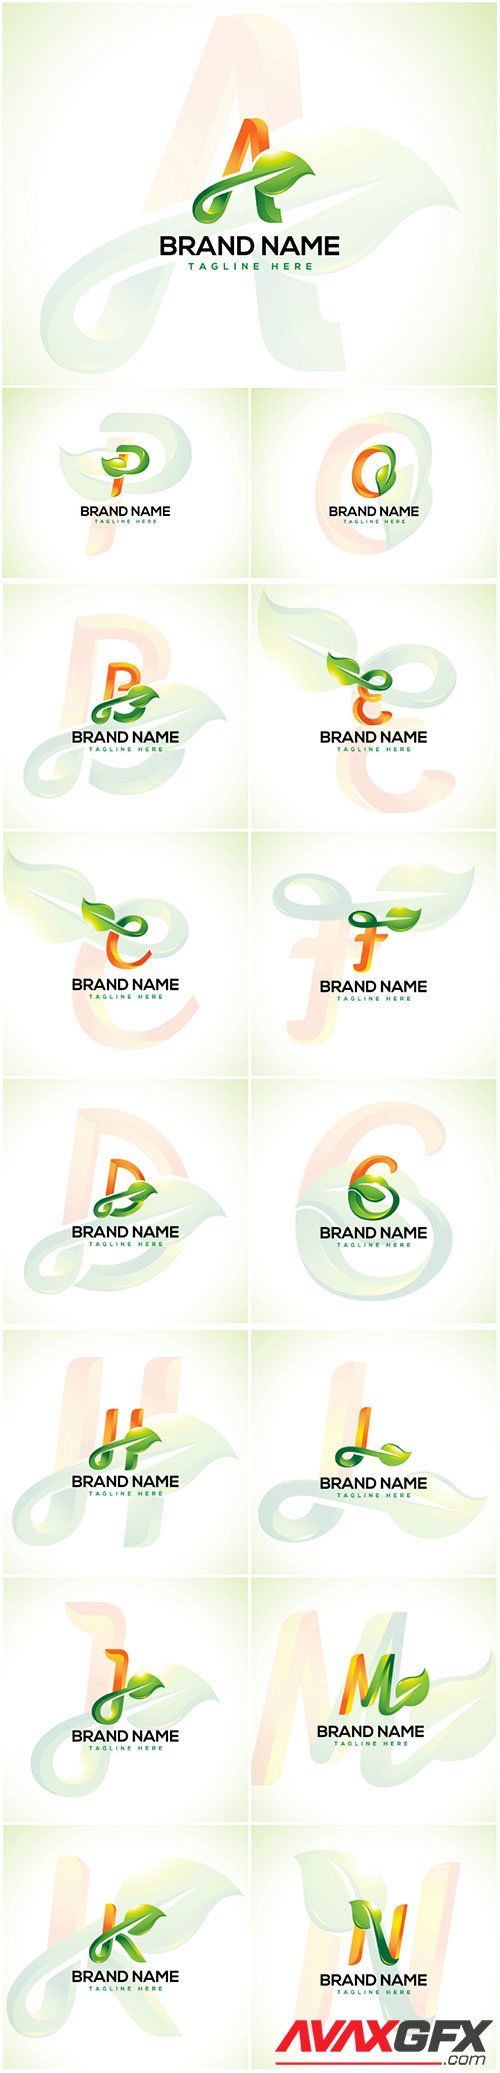 Leaf logo and initial letter logo concept